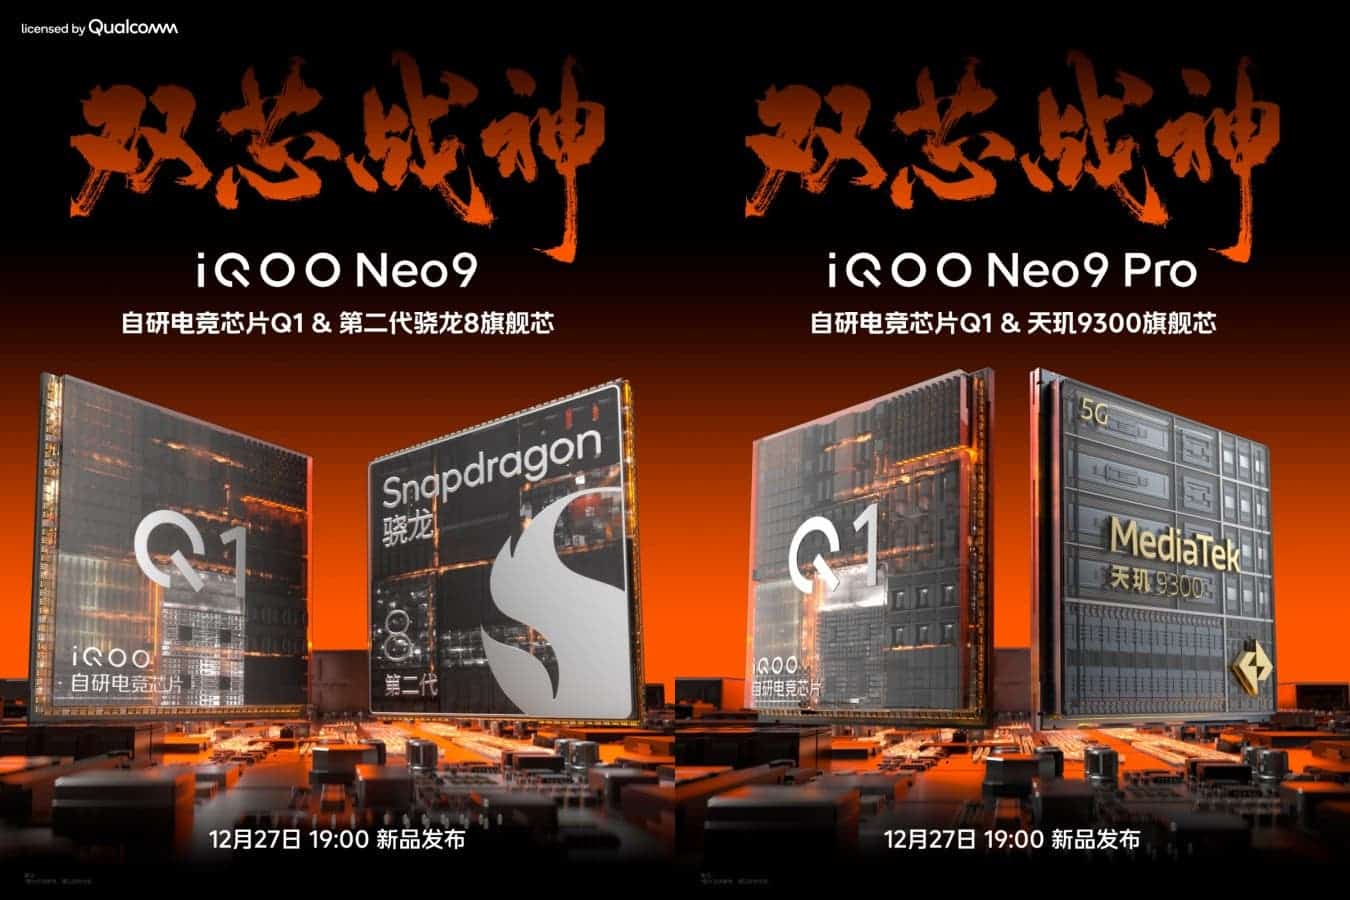 iQOO Neo9 series chipsets